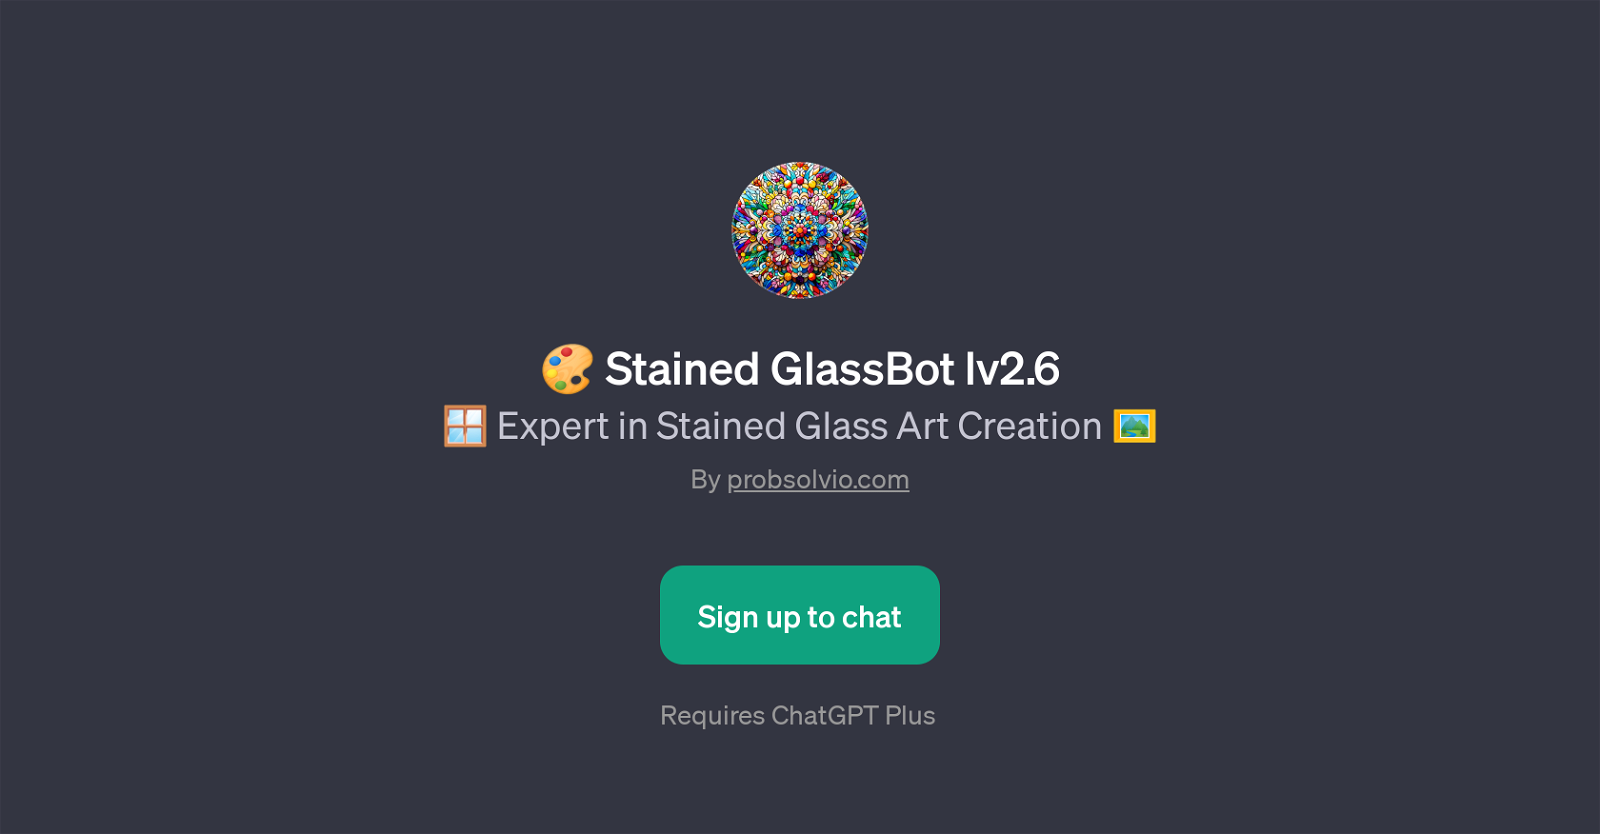 Stained GlassBot lv2.6 website